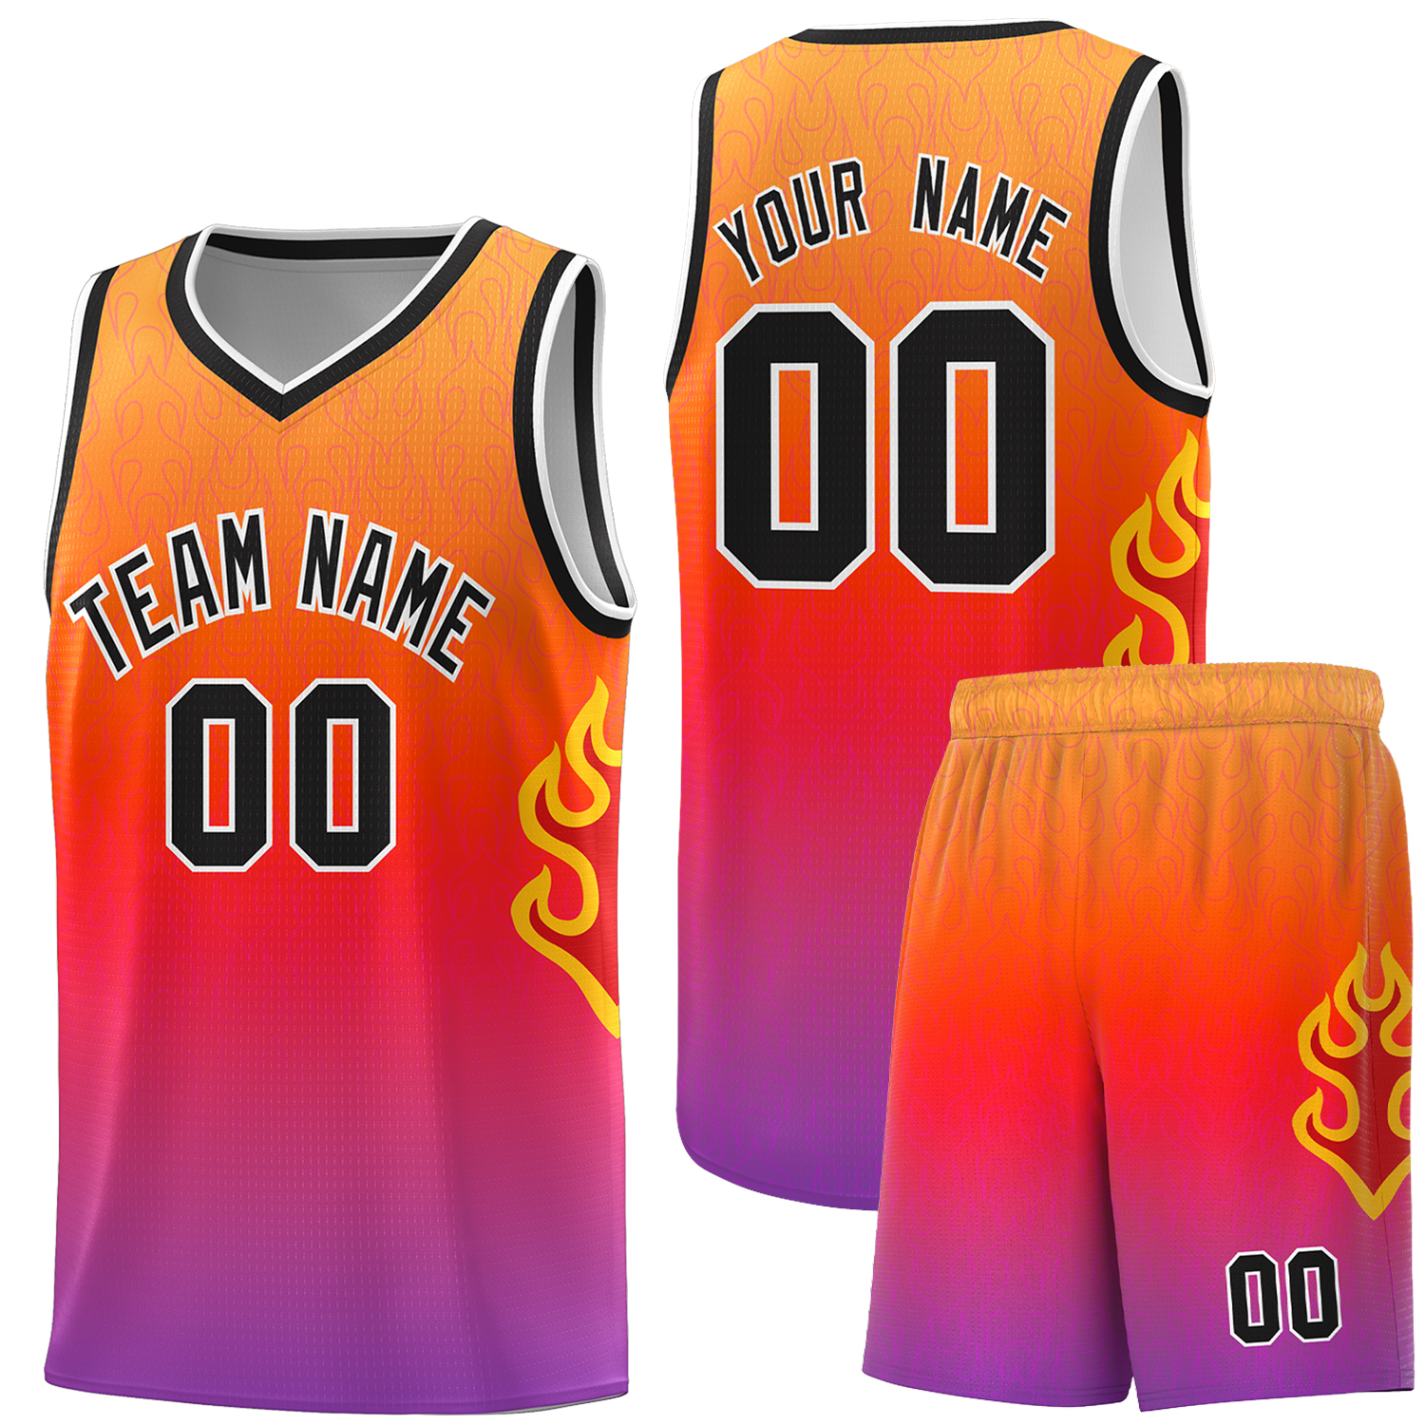 Custom Orange Red-Black Flame Gradient Fashion Sports Uniform Basketball Jersey